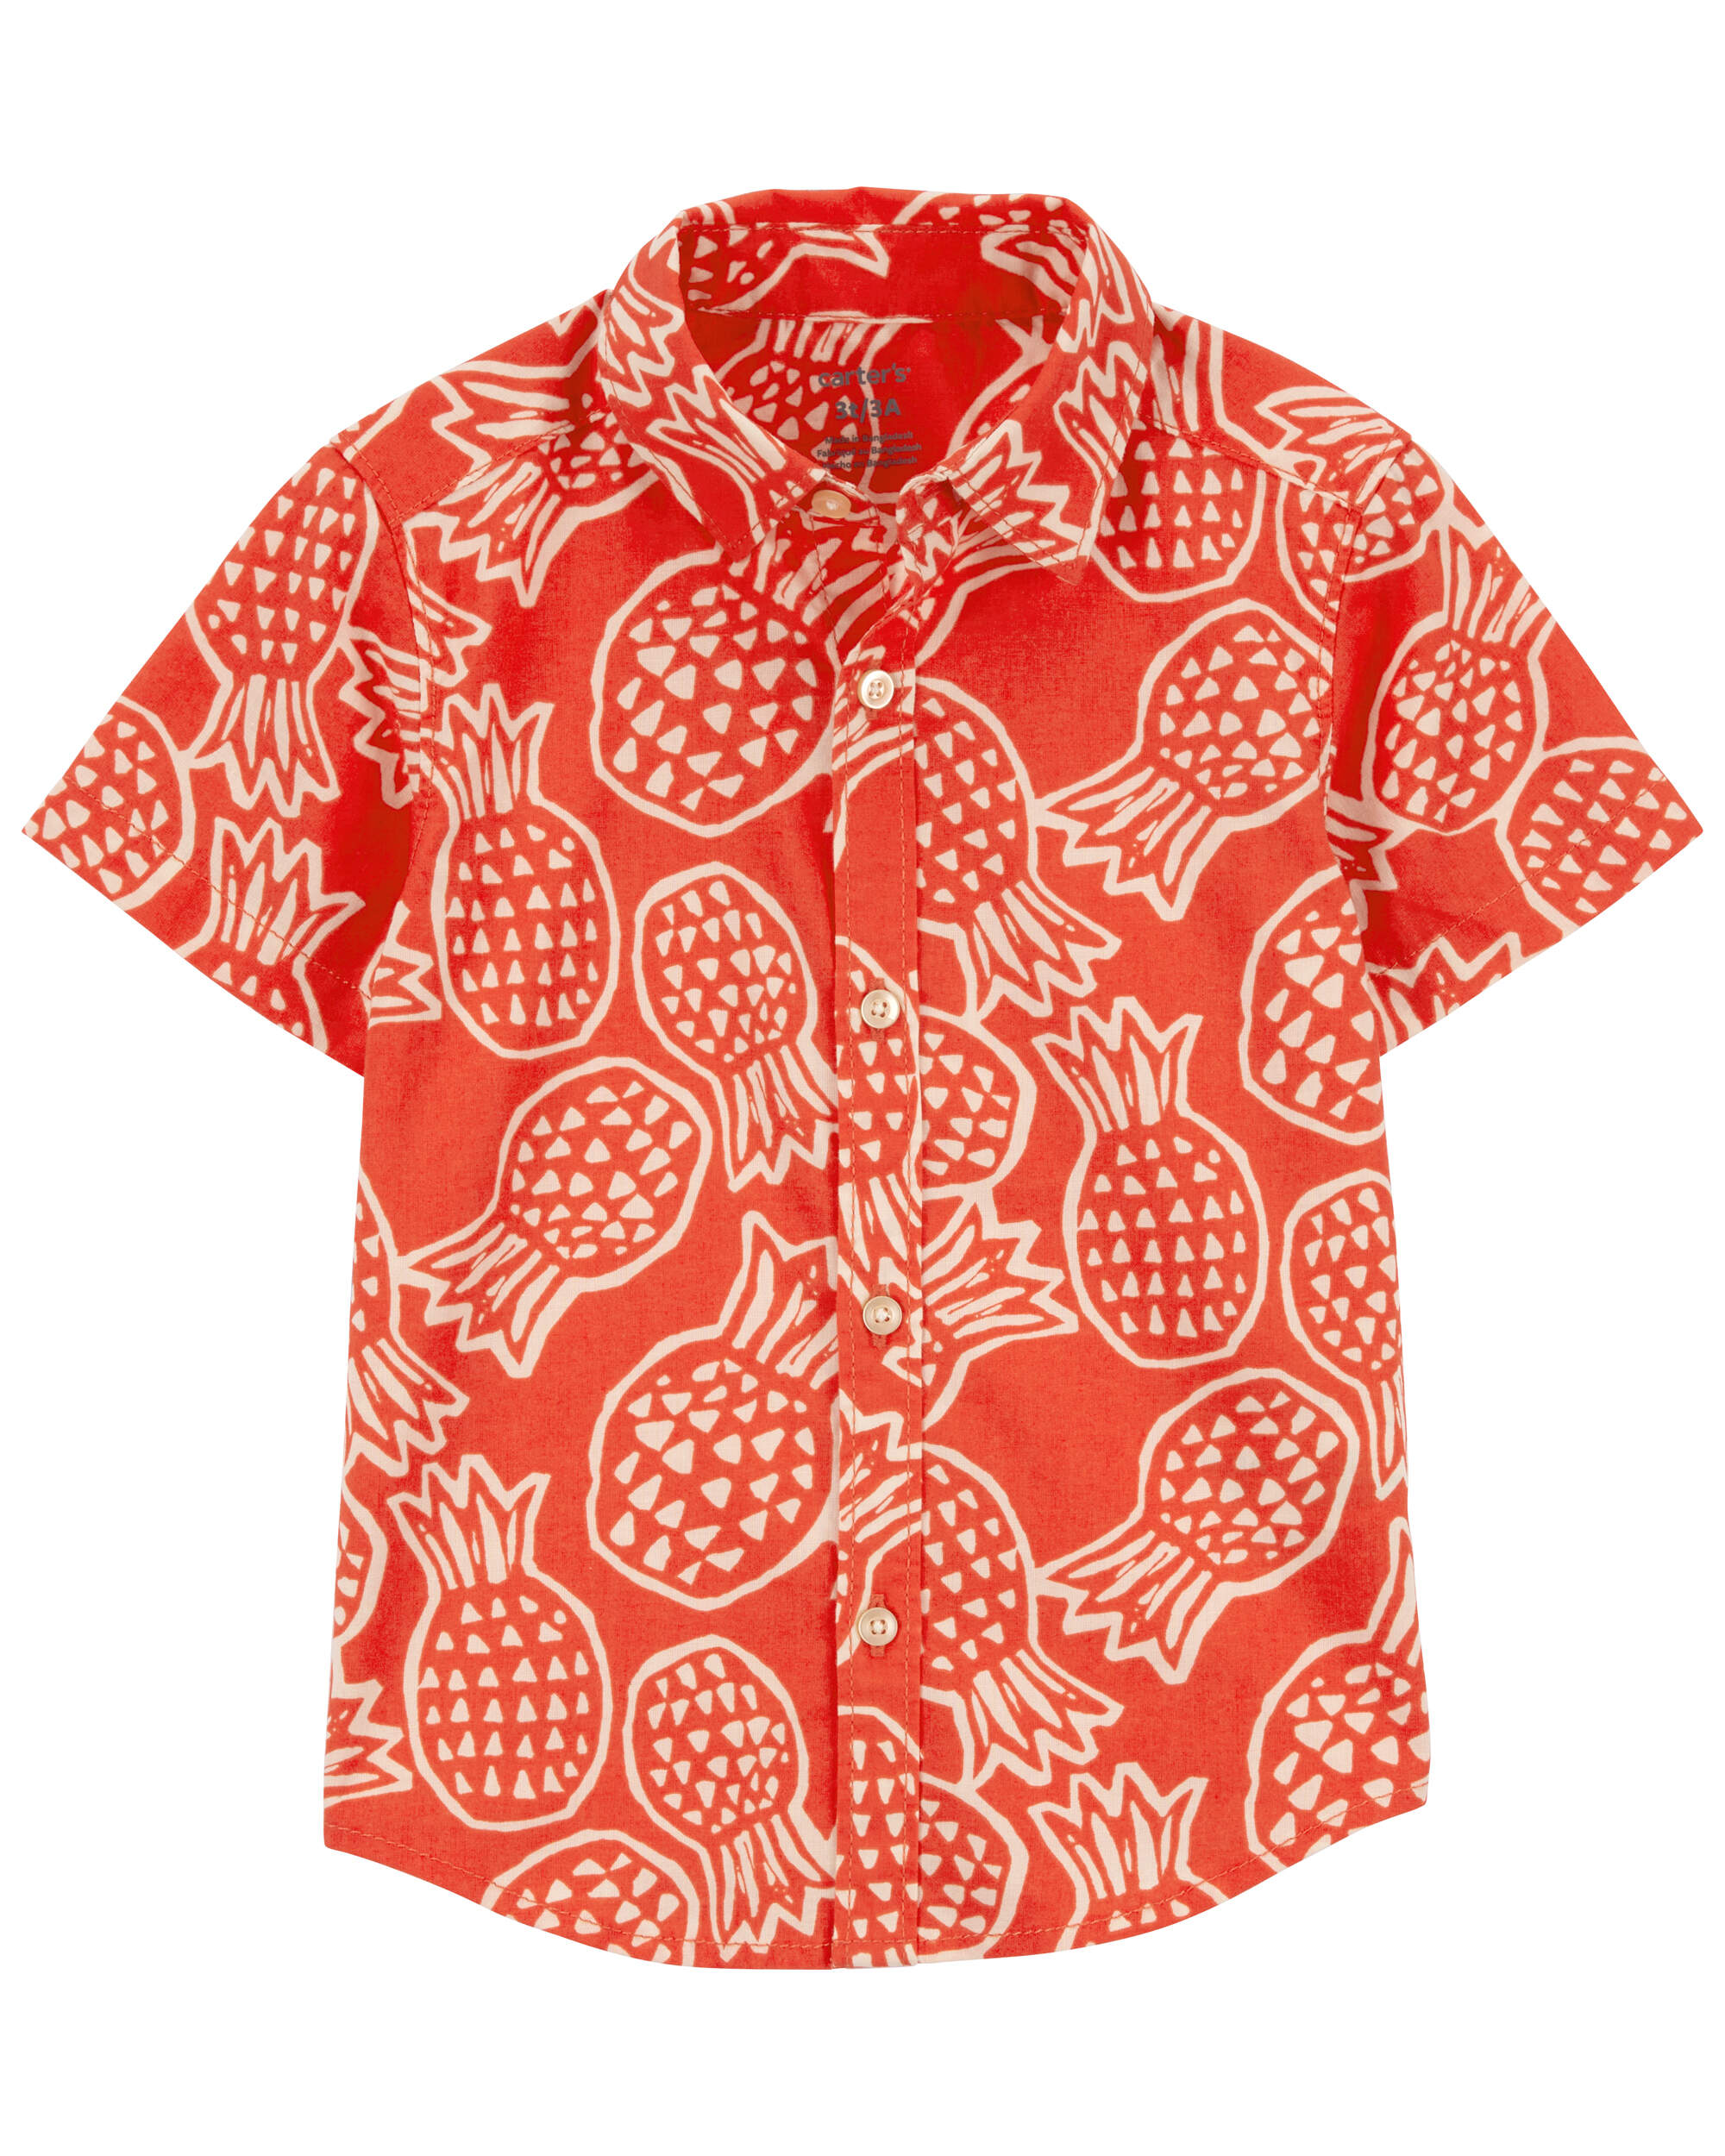 Toddler Pineapple Button-Down Shirt